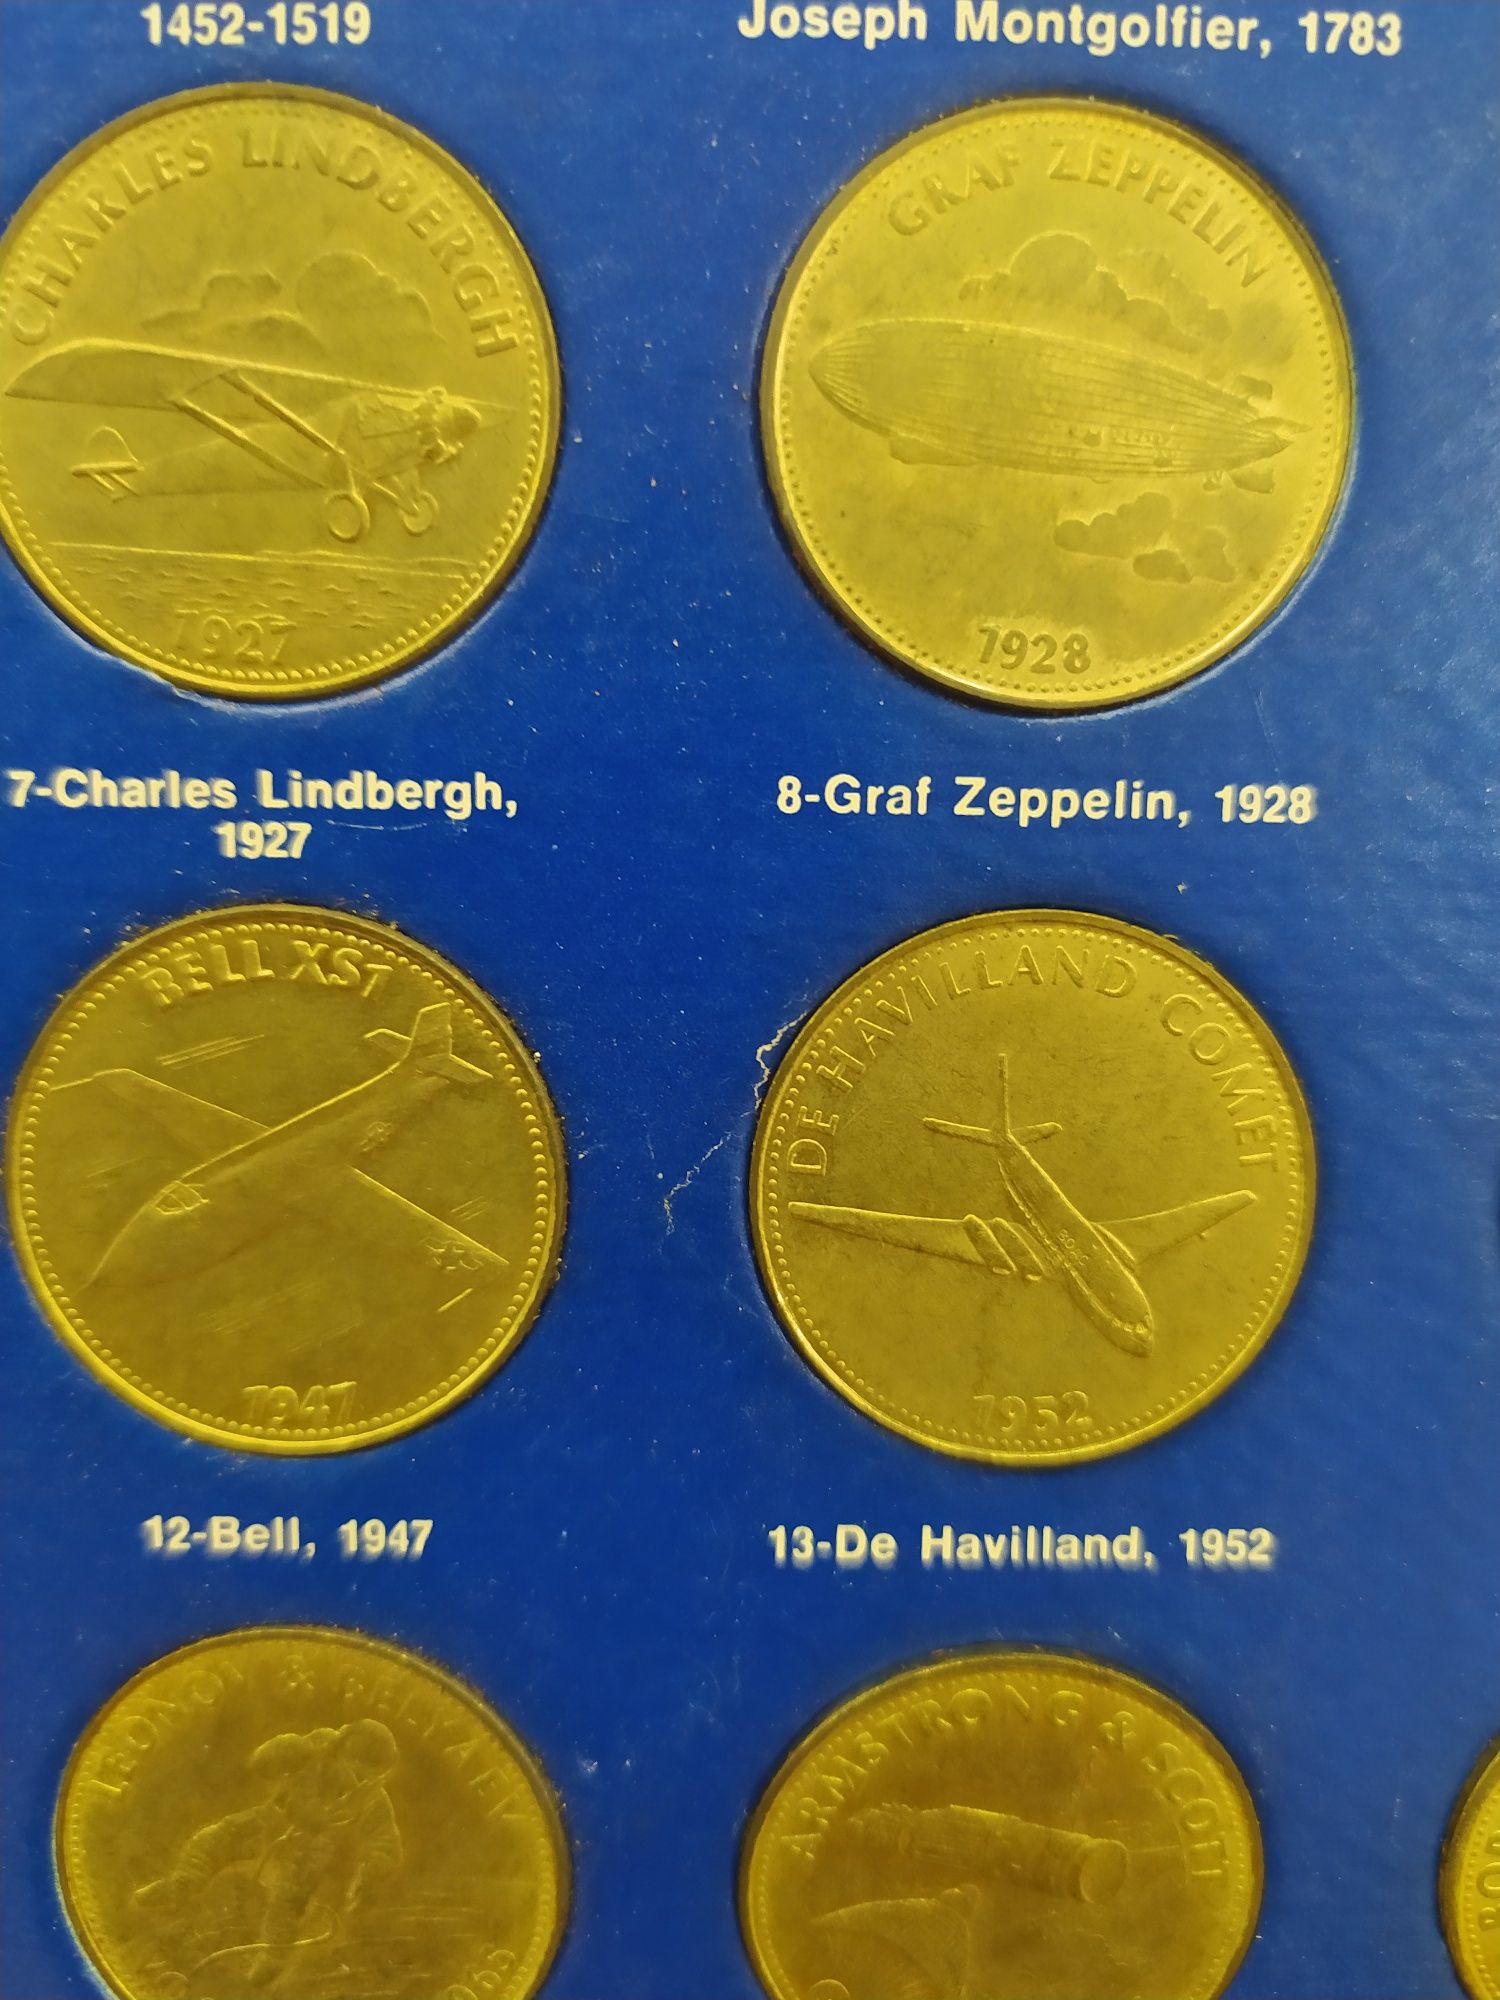 Zestaw medali monet Shell Epopée de Espace 1970 rok! Starocie. Kolekcj